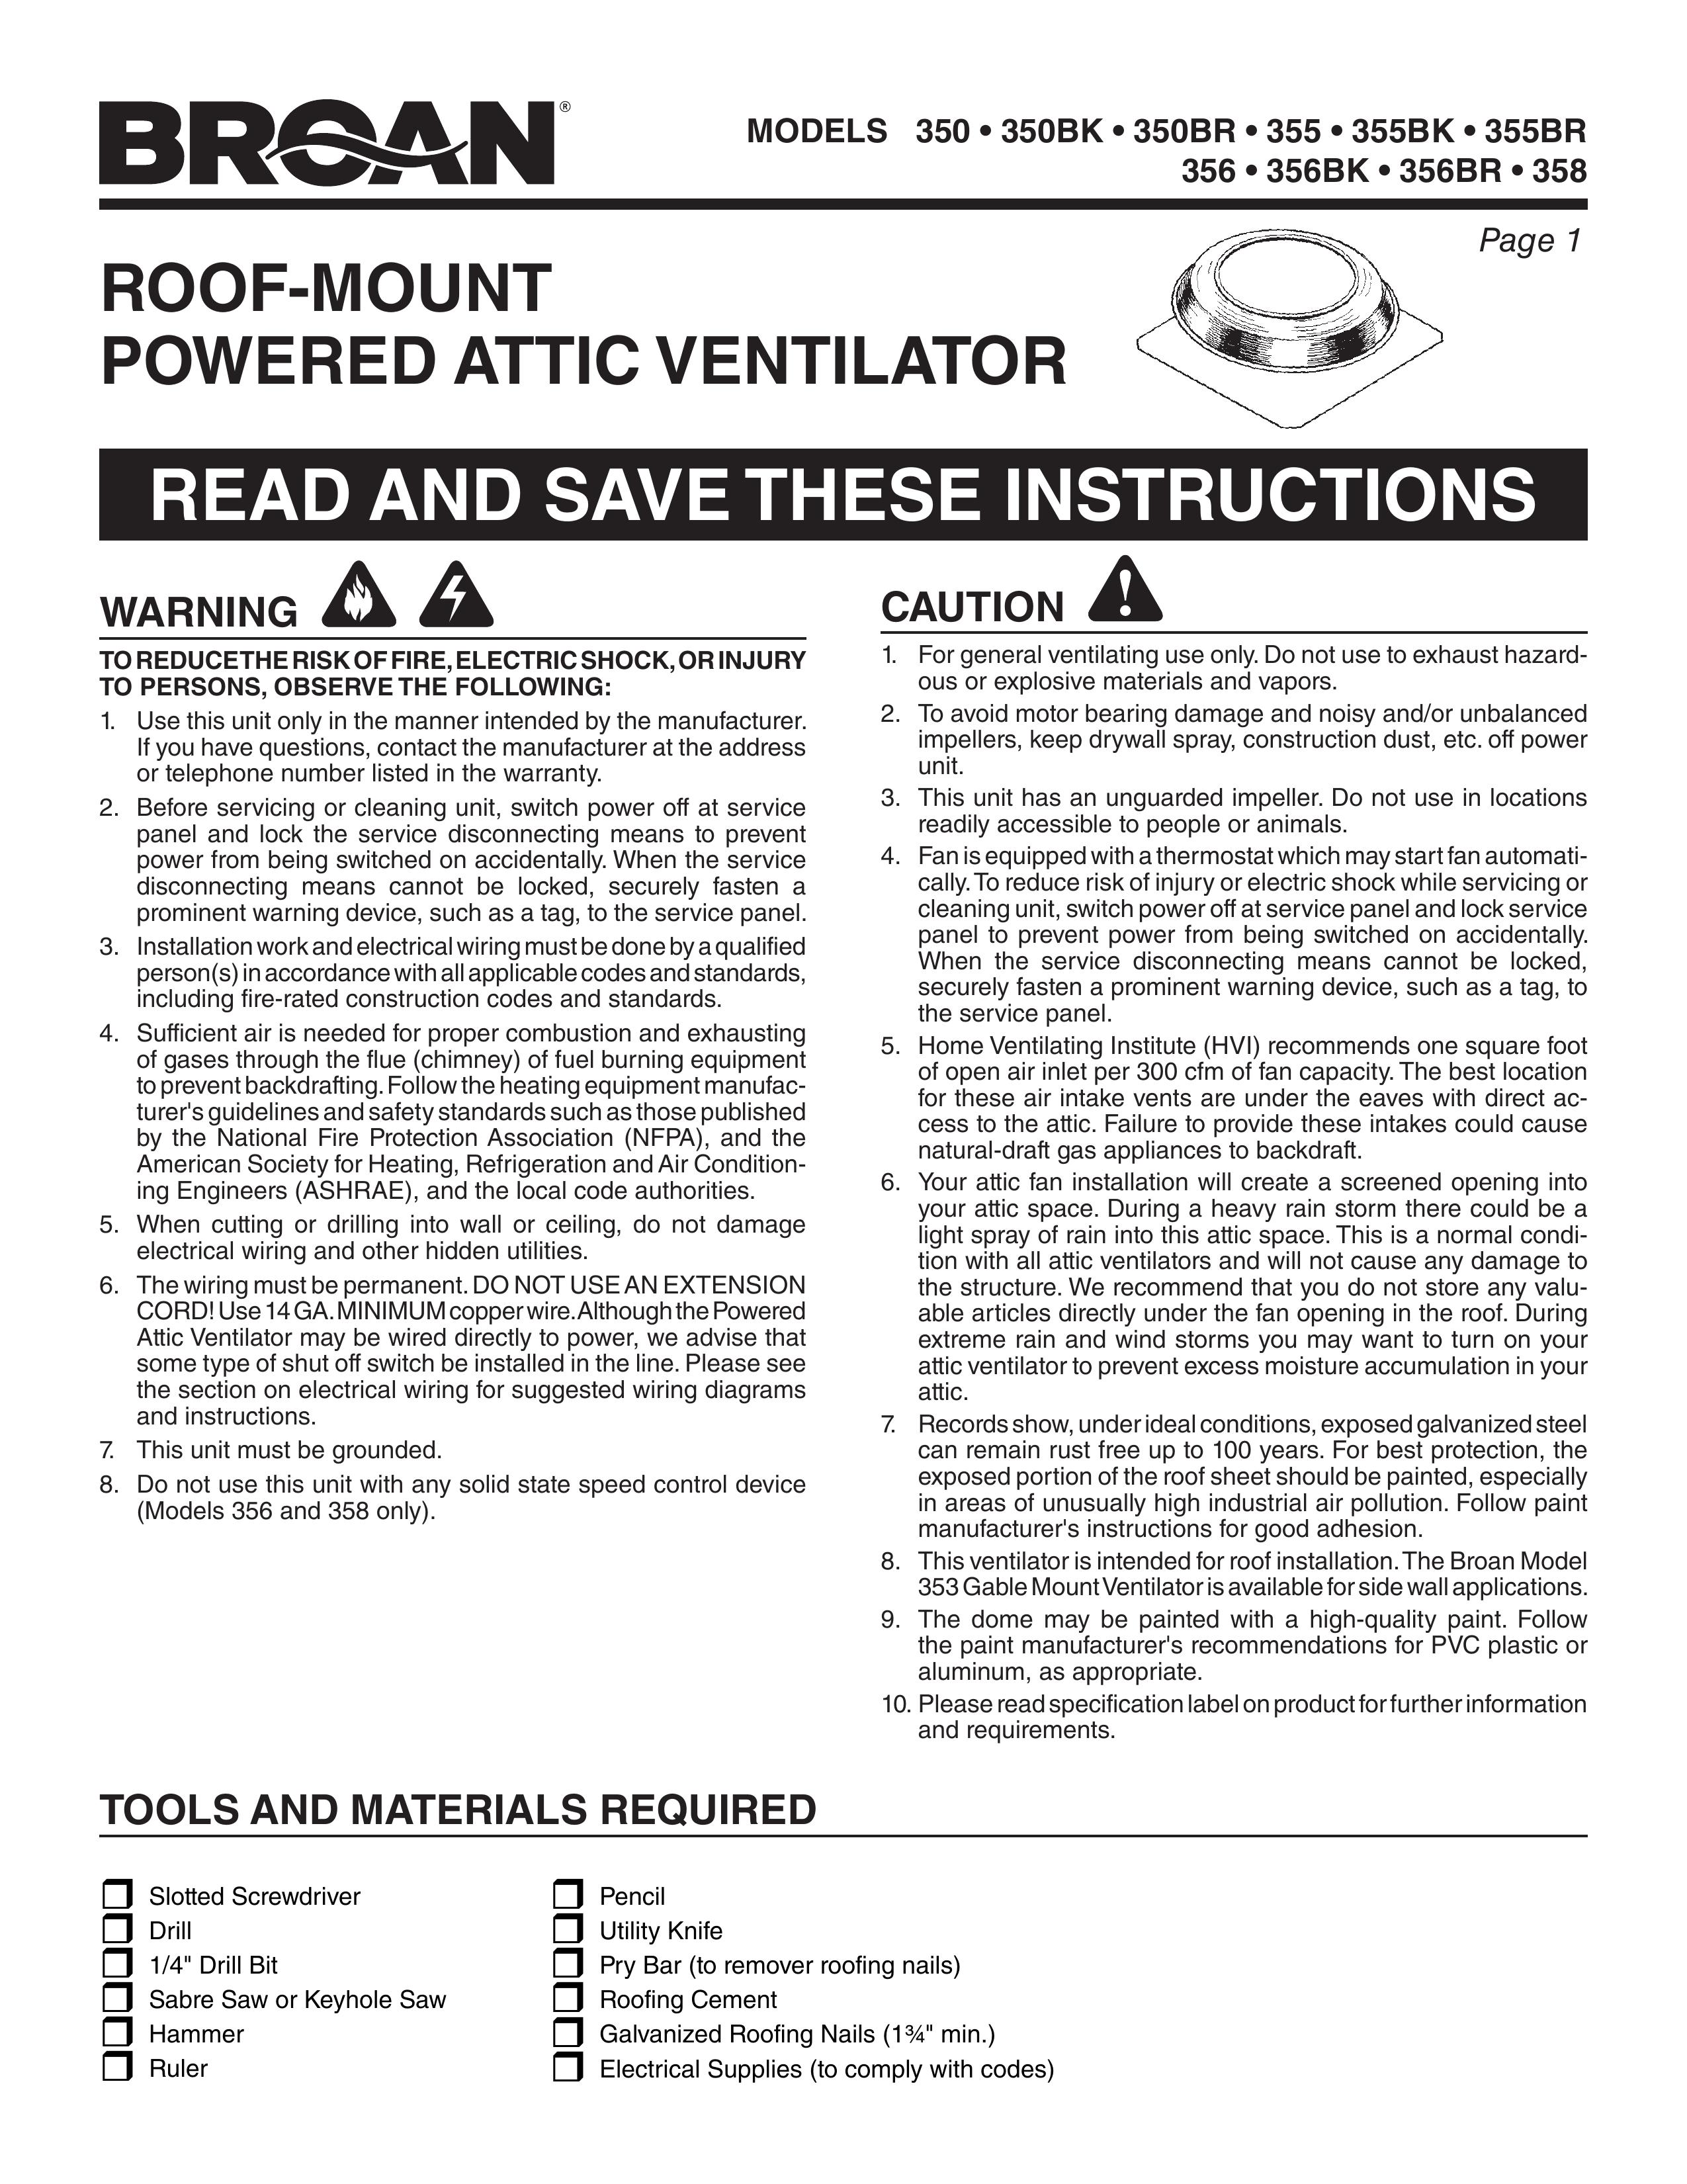 Broan 355BK Ventilation Hood User Manual